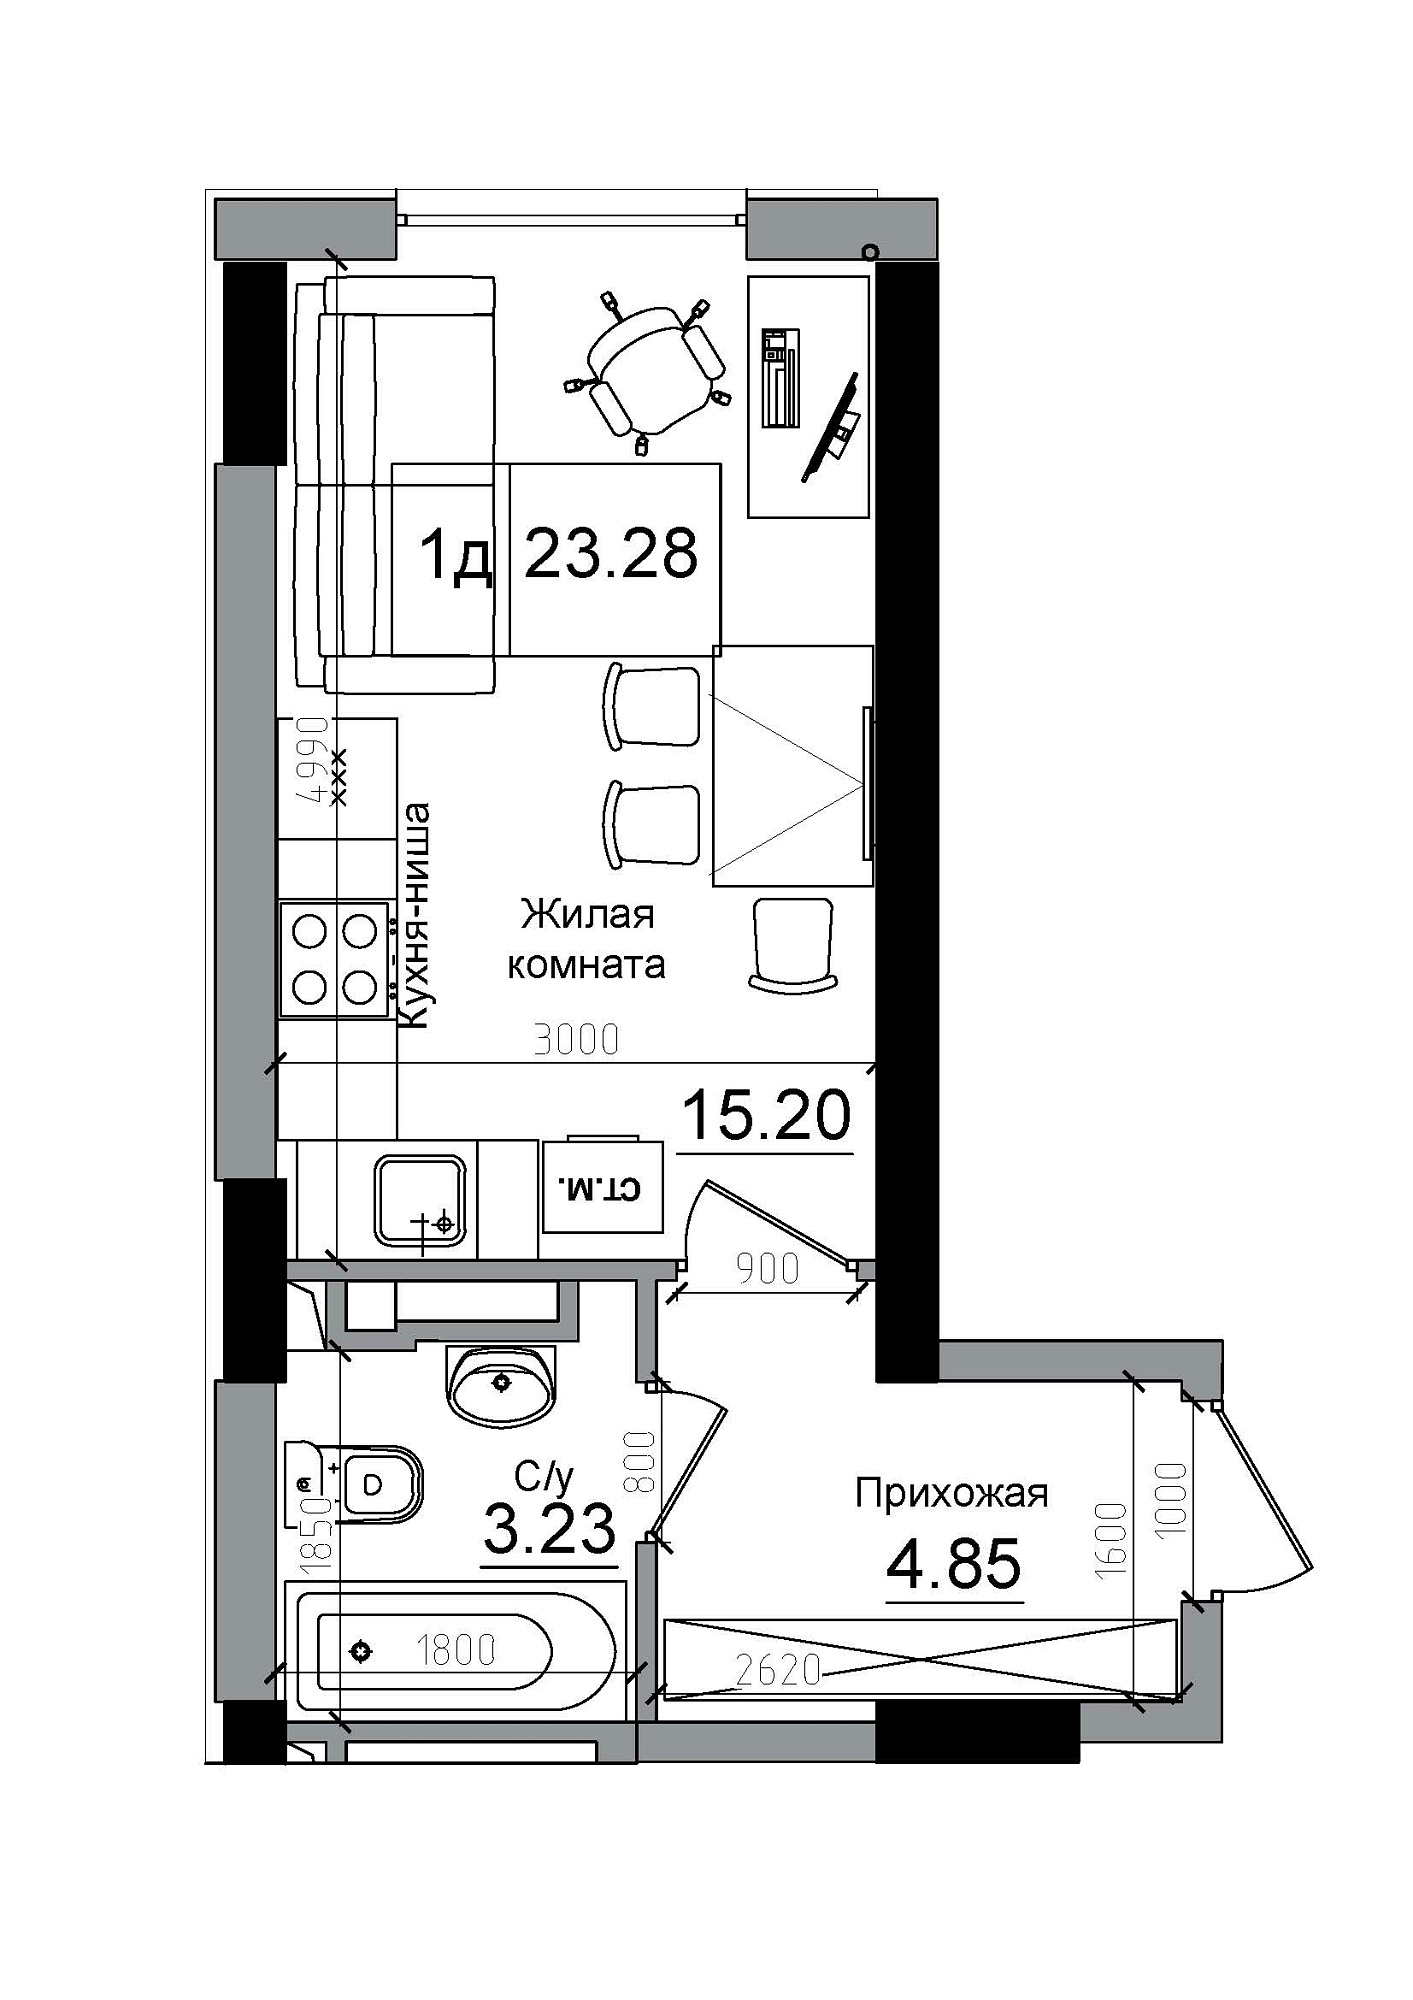 Planning Smart flats area 23.28m2, AB-12-06/00005.